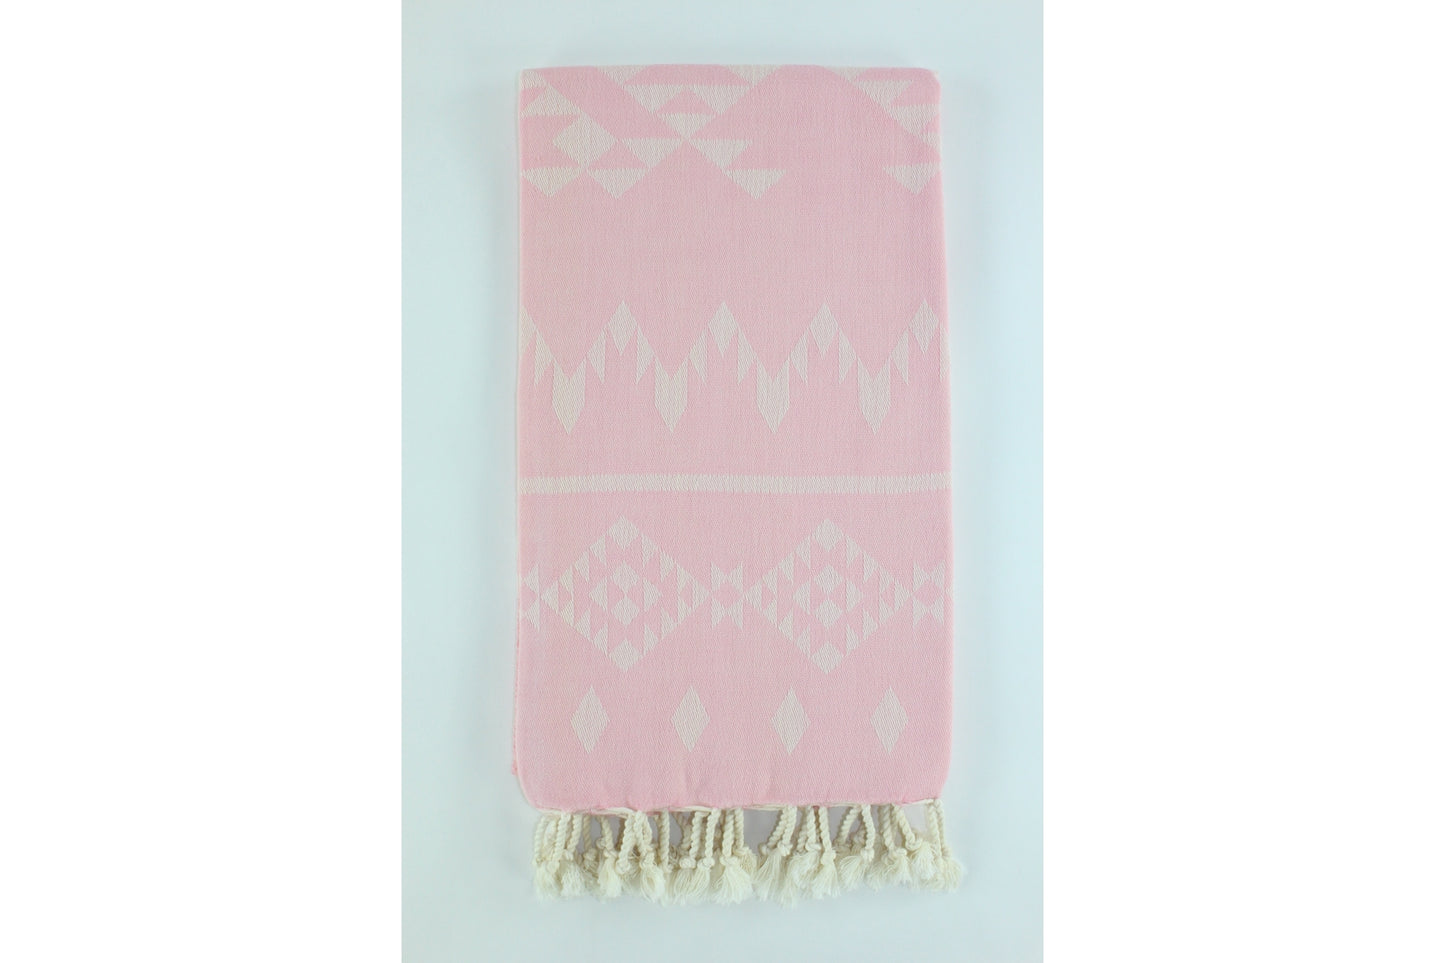 Premium Turkish Kilim Towel Peshtemal Fouta (Light Pink)